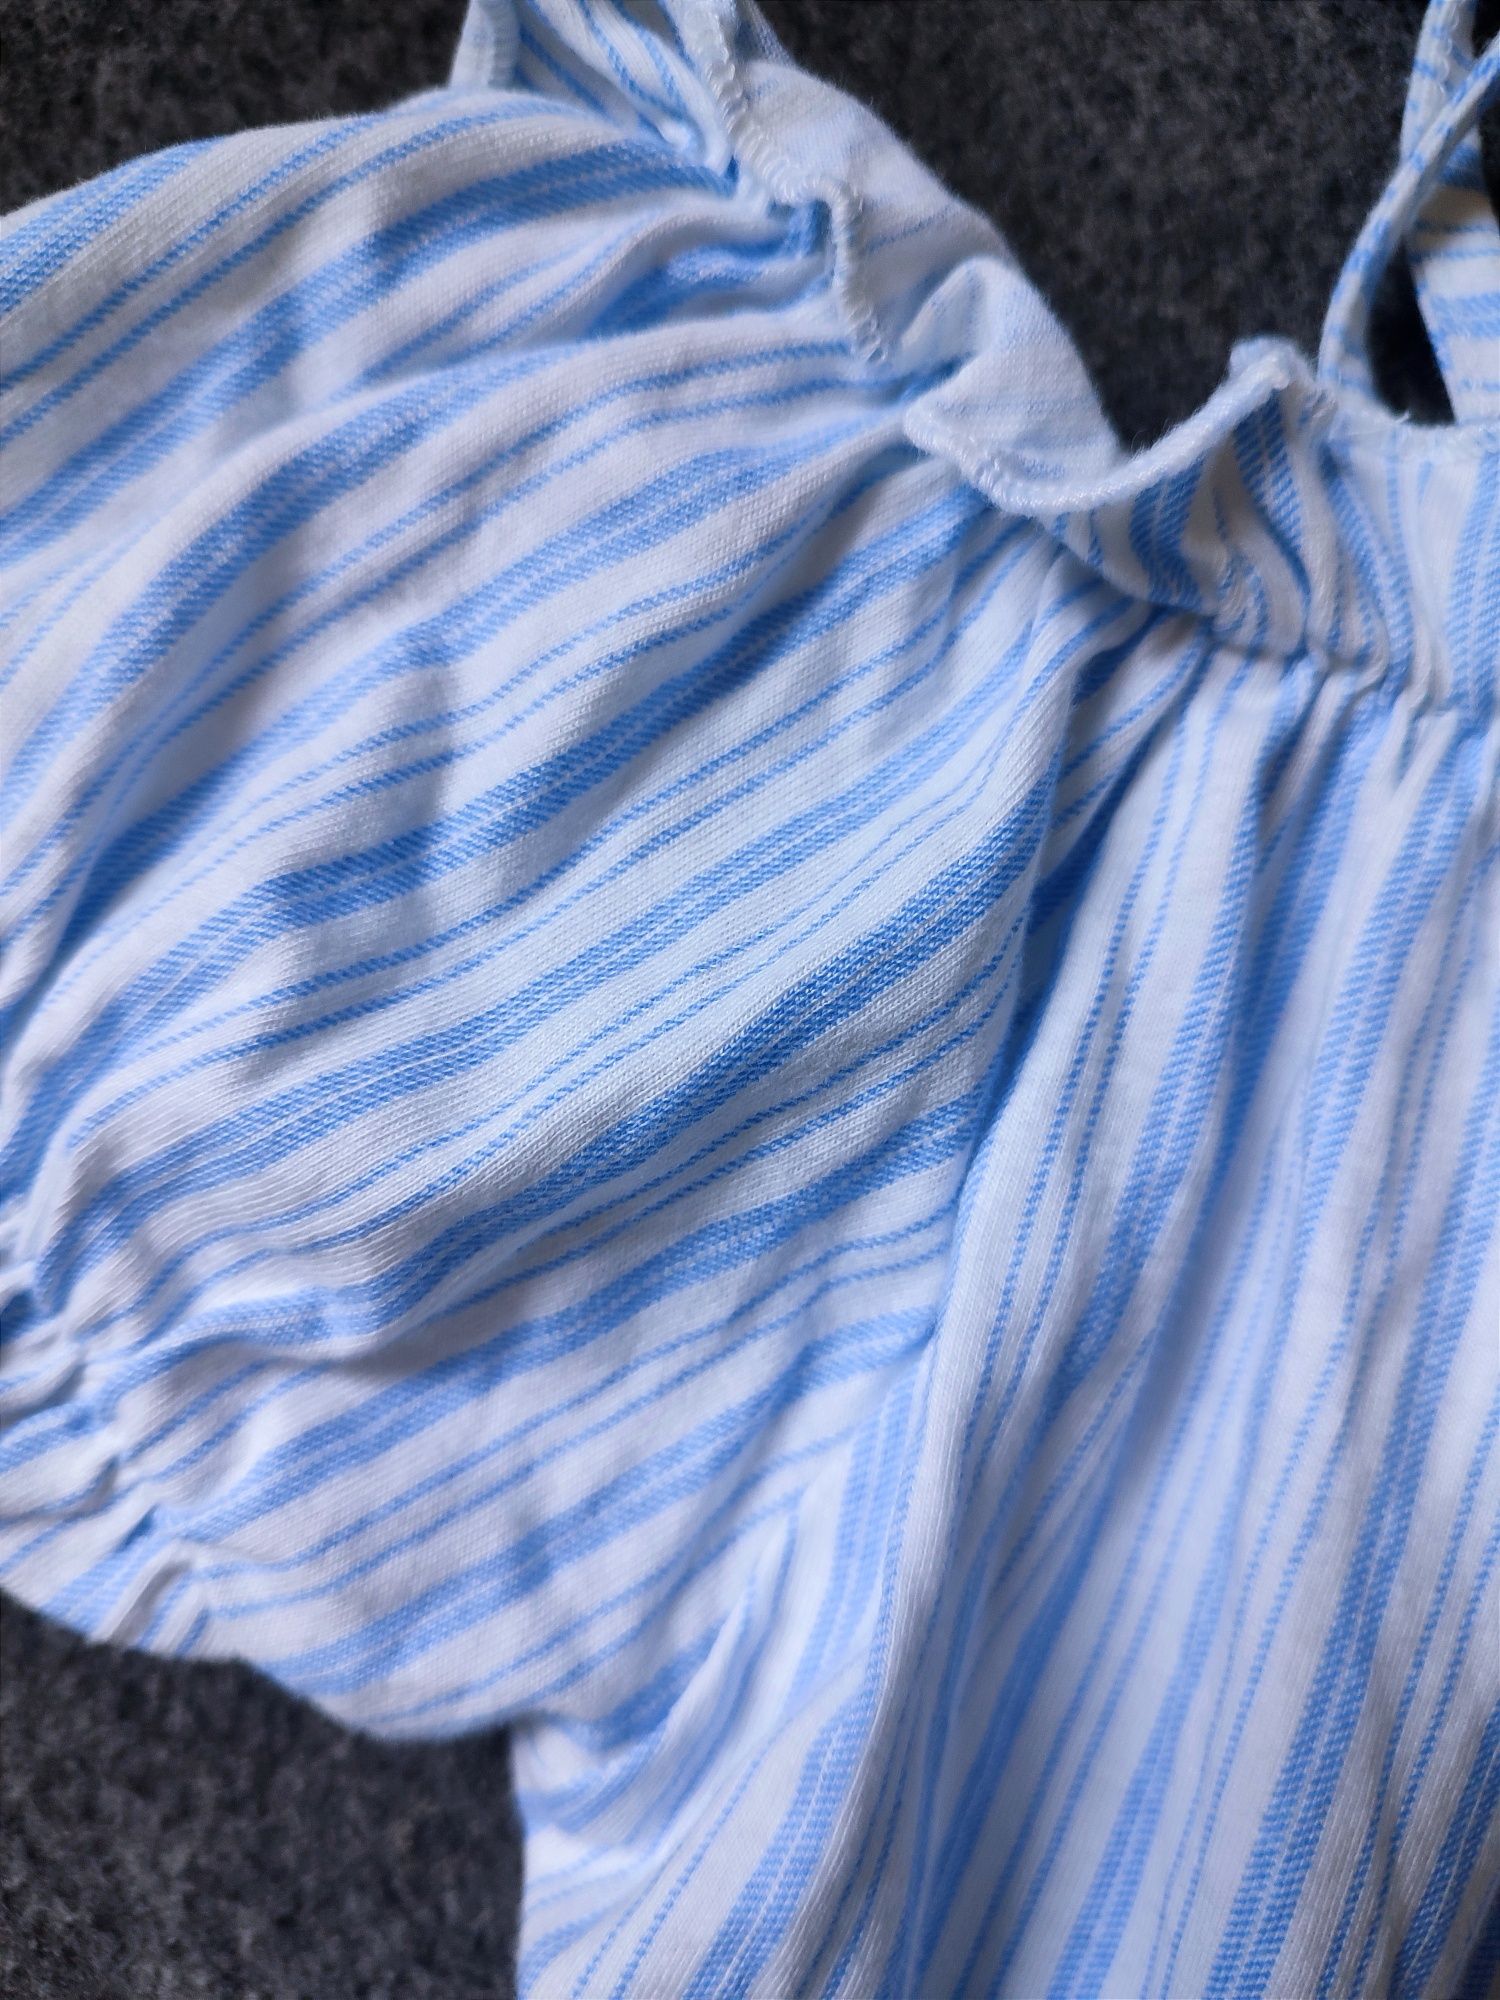 Damska bluzka w paski w stylu hiszpanki na lato 36/S